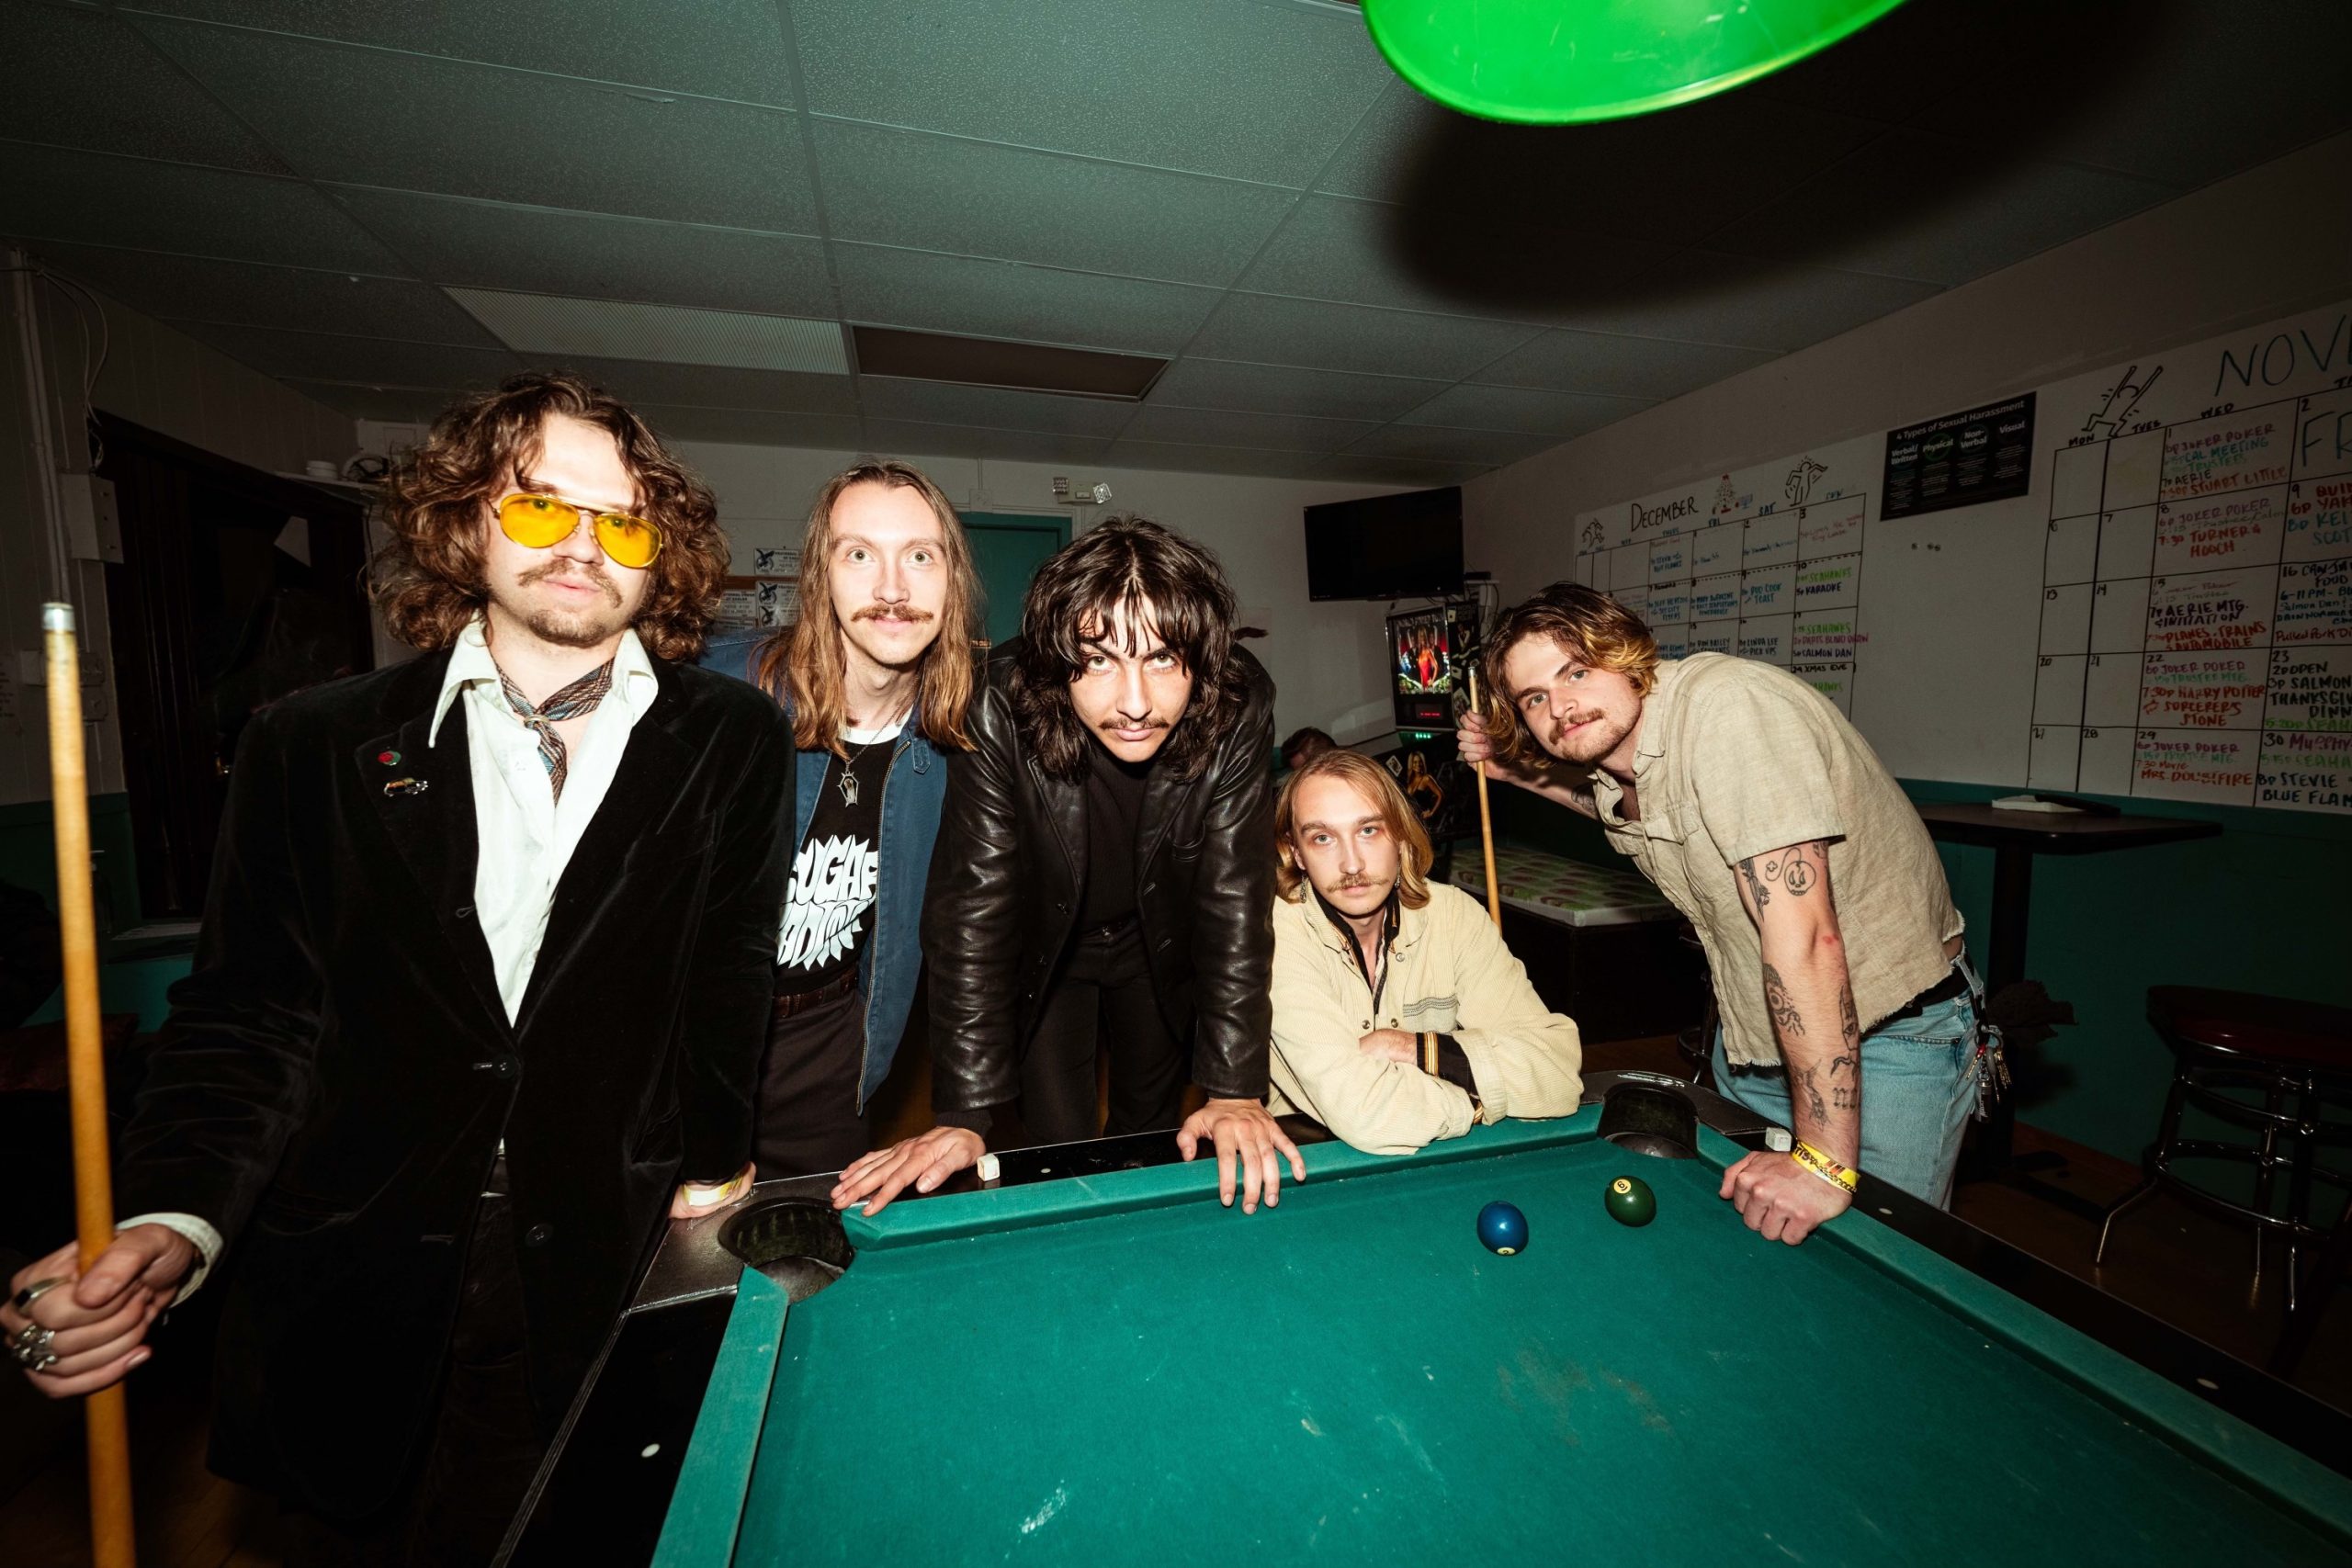 Members of The Macks, a Portland rock band, pose around a pool table.